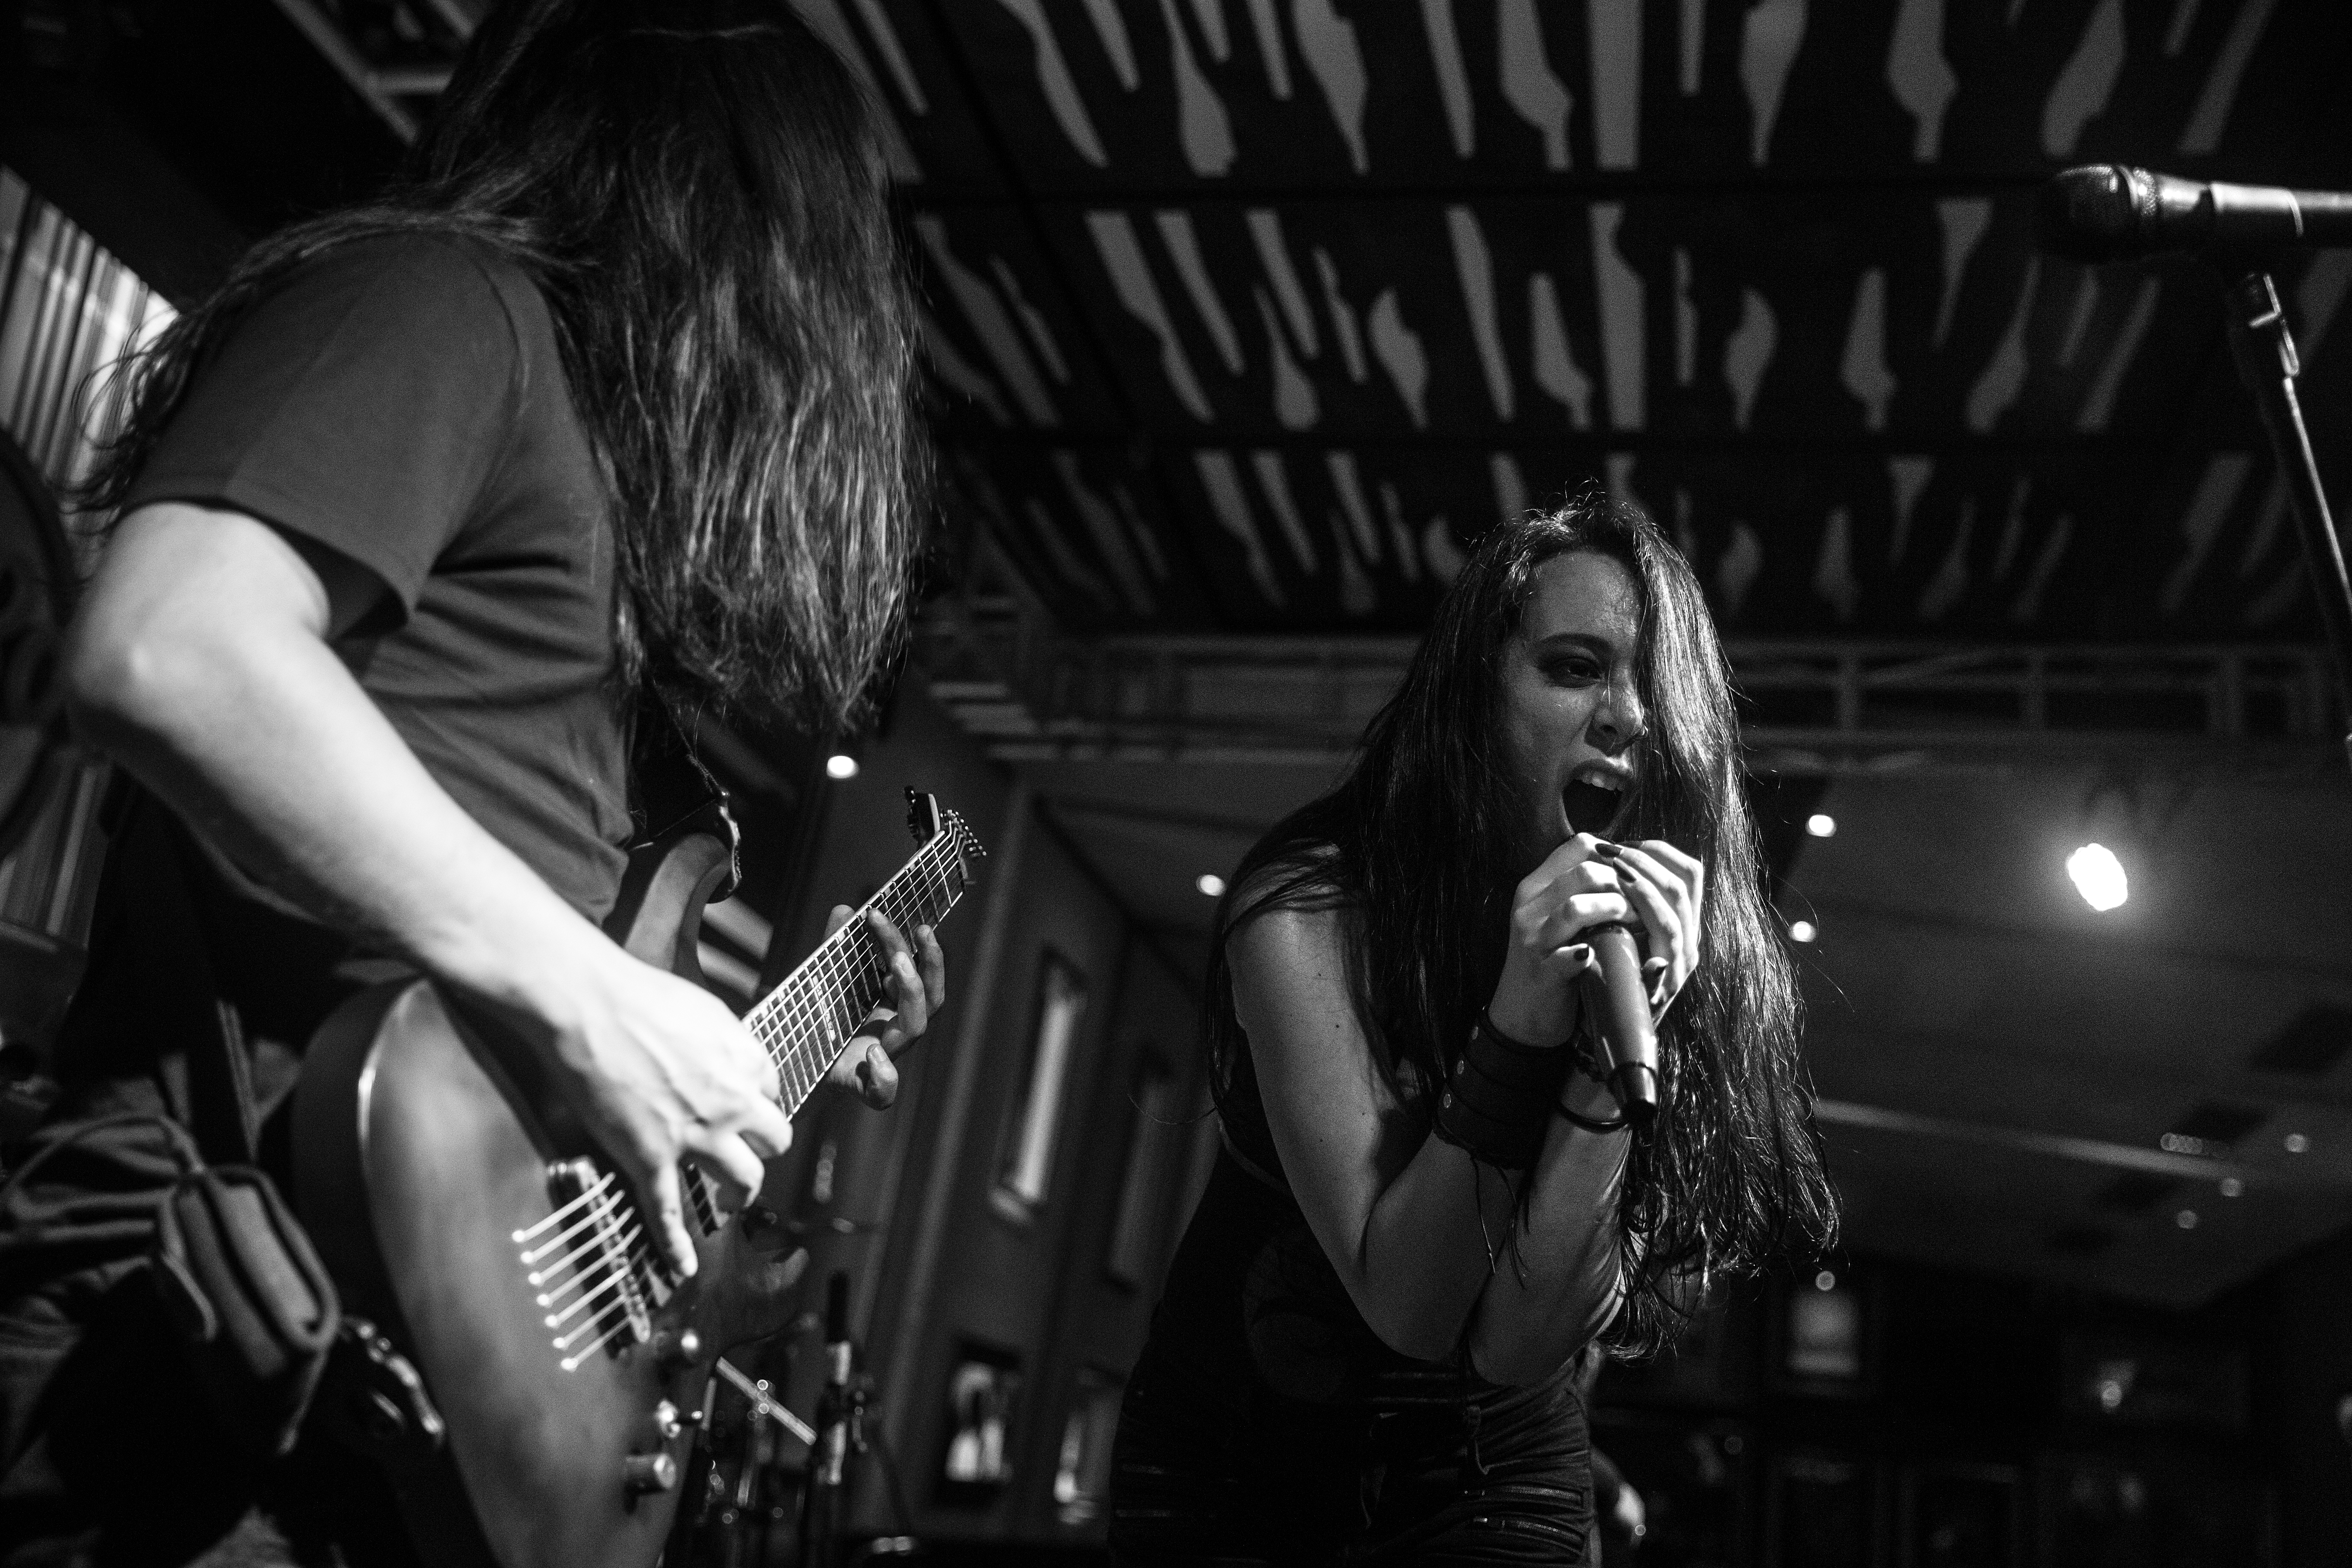 NMK live at Hard Rock Cafe Lima 03.22.18